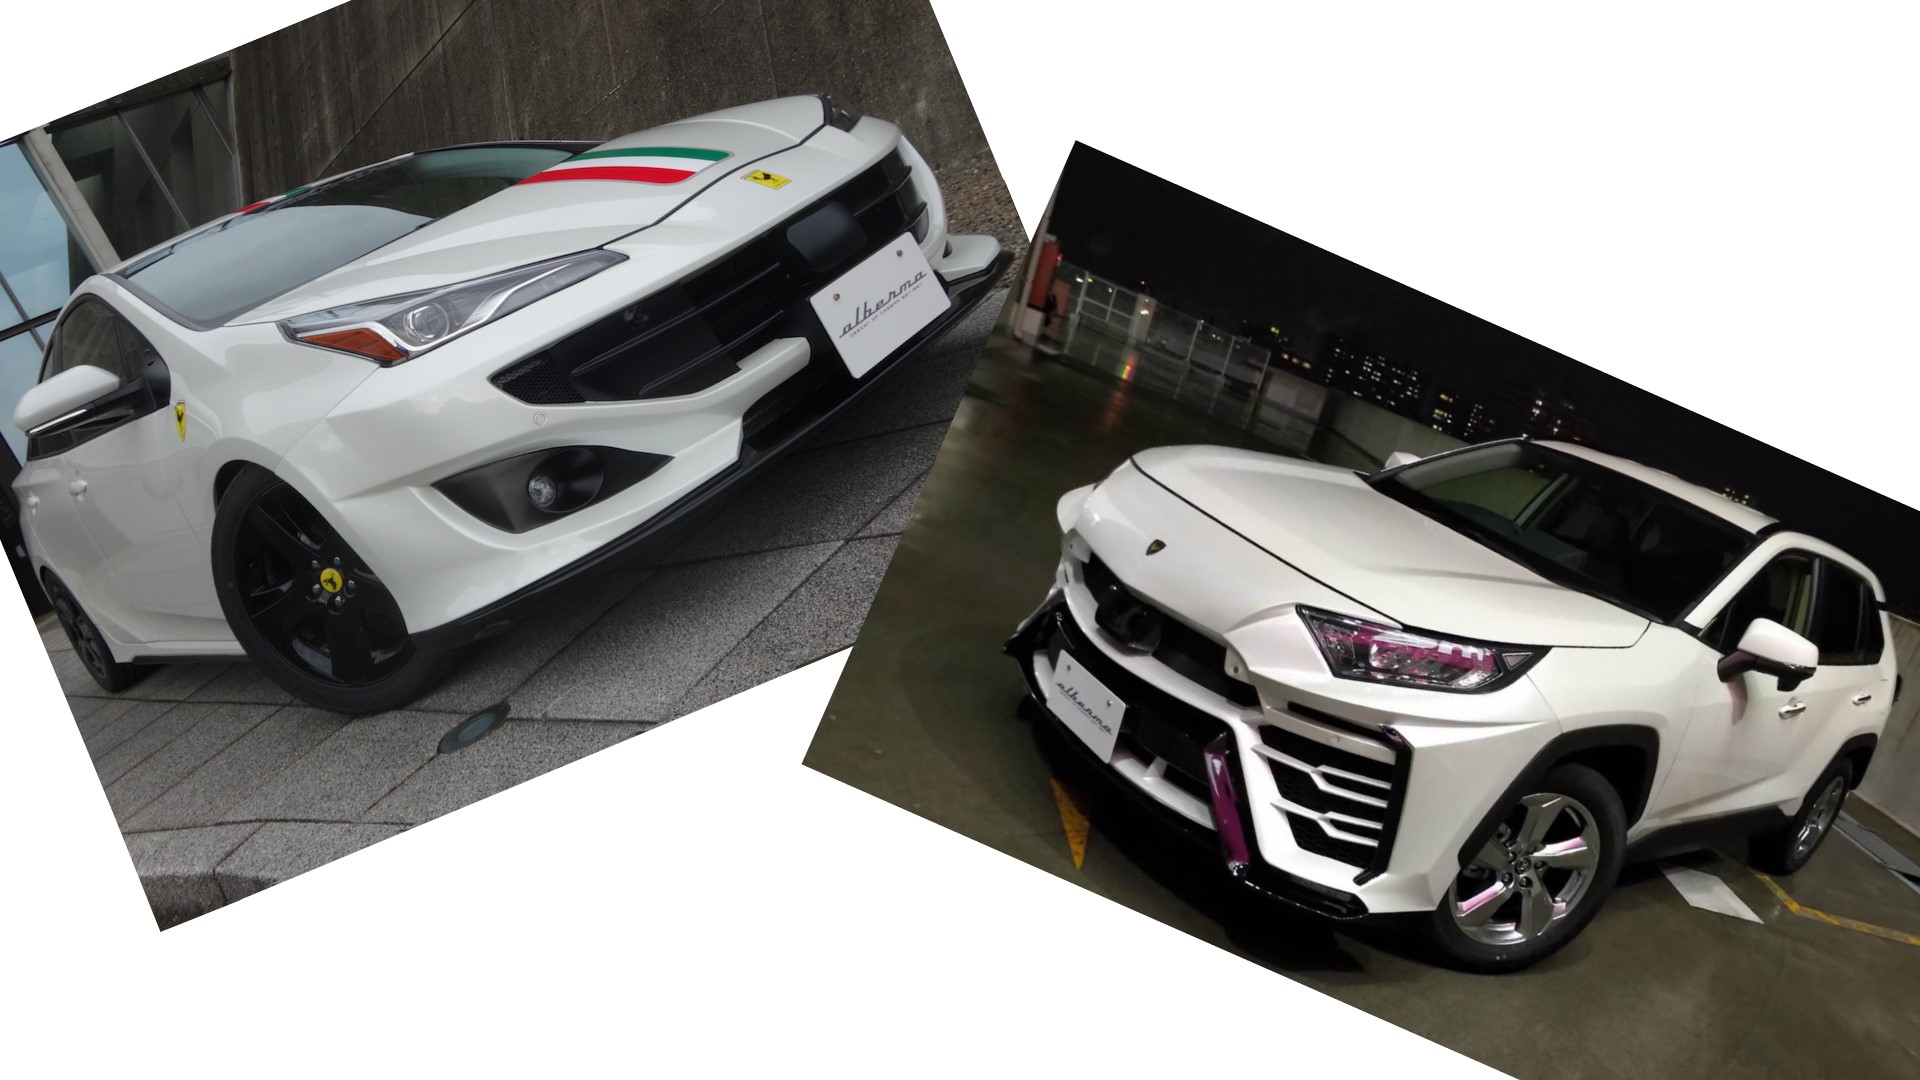 ¿Cuál te gusta más? ¿El “Lamborghini” RAV4 o el “Ferrari” Prius?